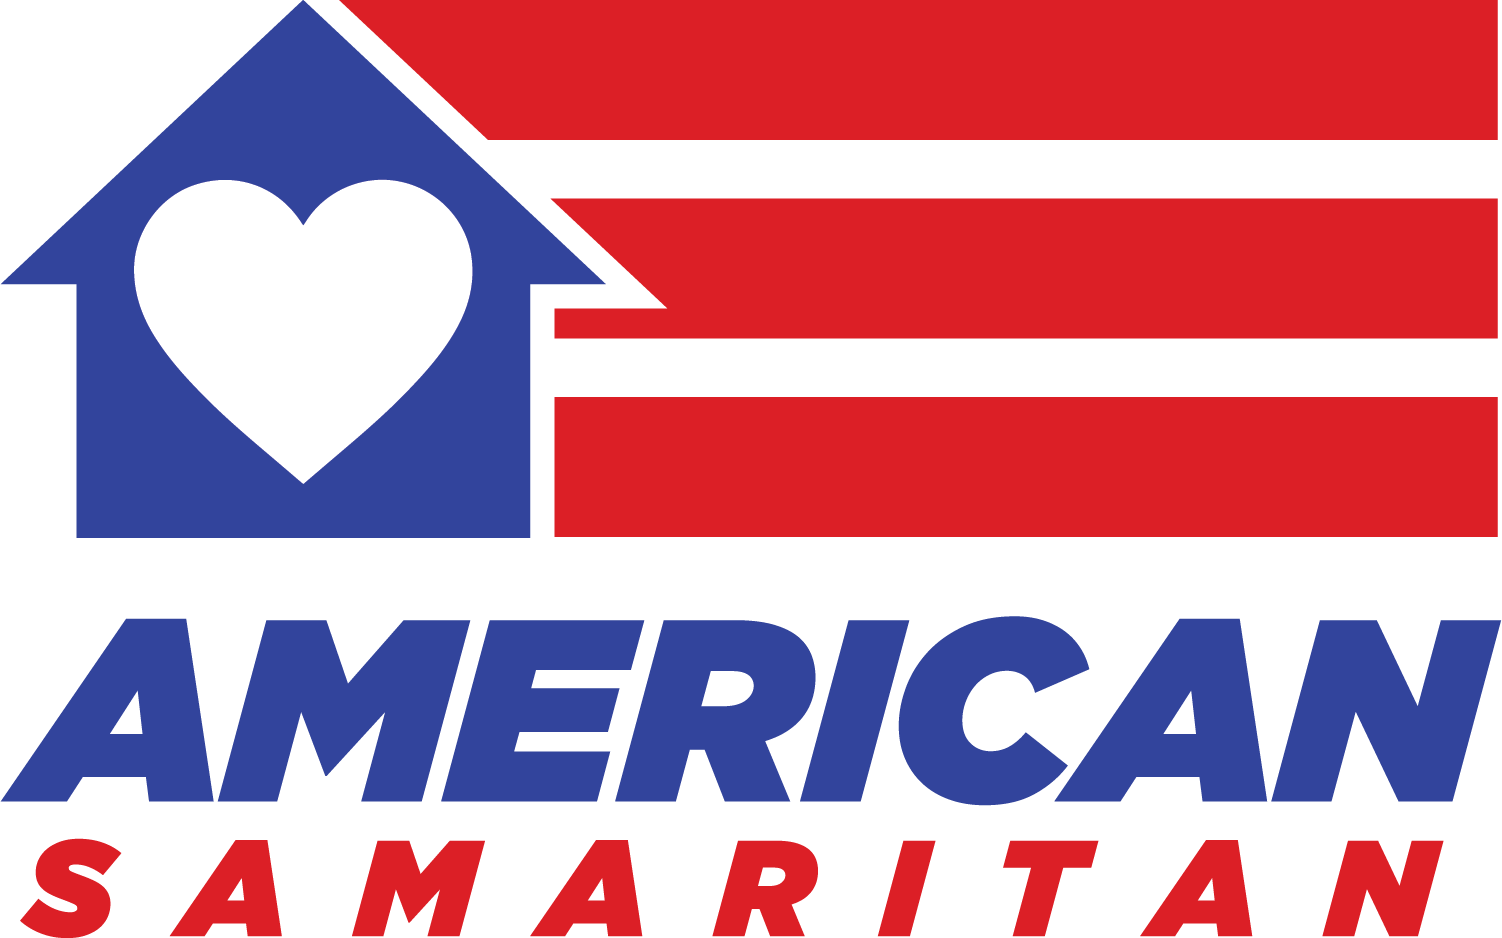 American Samaritan Logo